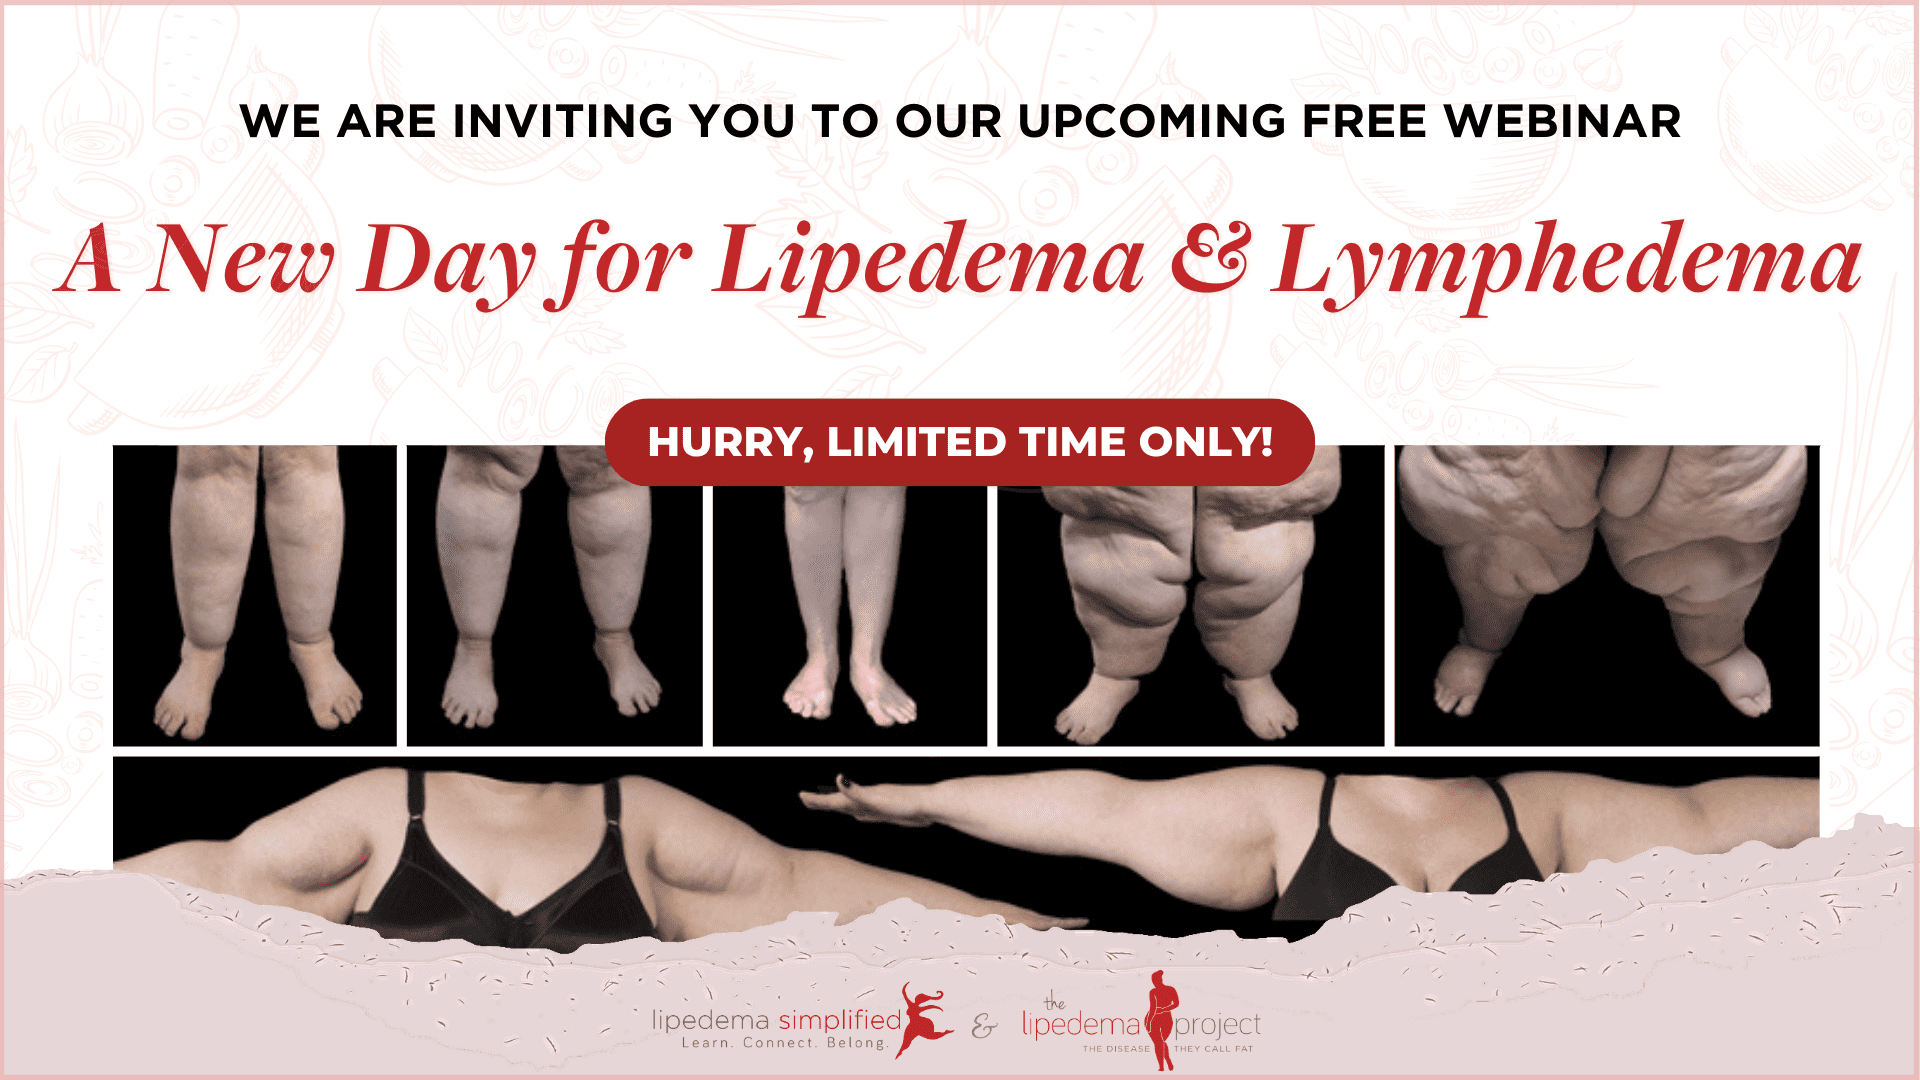 Tools for Lipedema Treatment